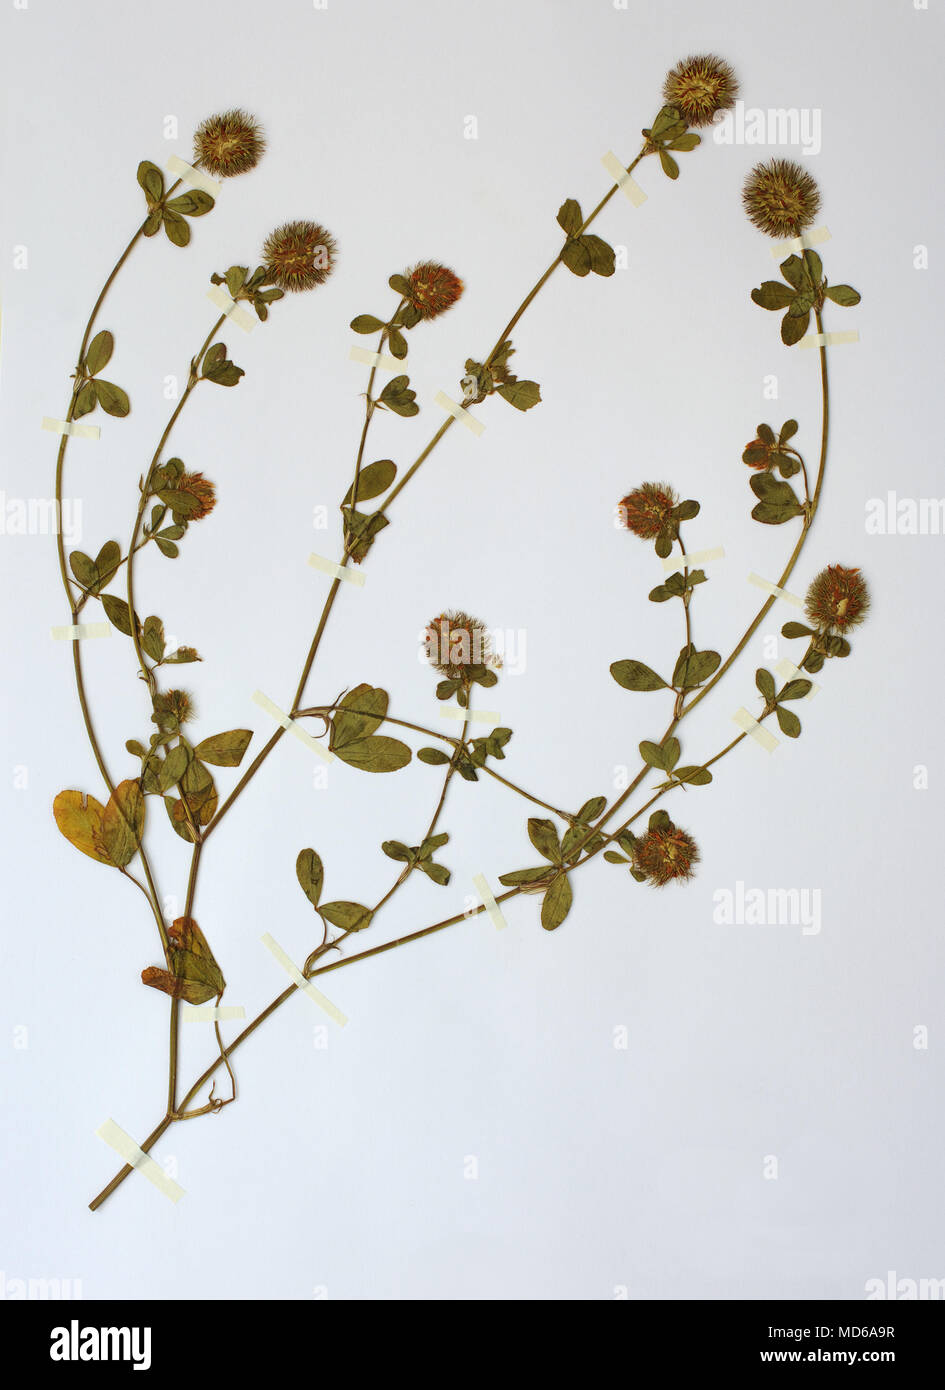 Herbarium Blatt mit Trifolium echinatum, die stachelige Klee, Familie Fabaceae (Leguminosae) Stockfoto